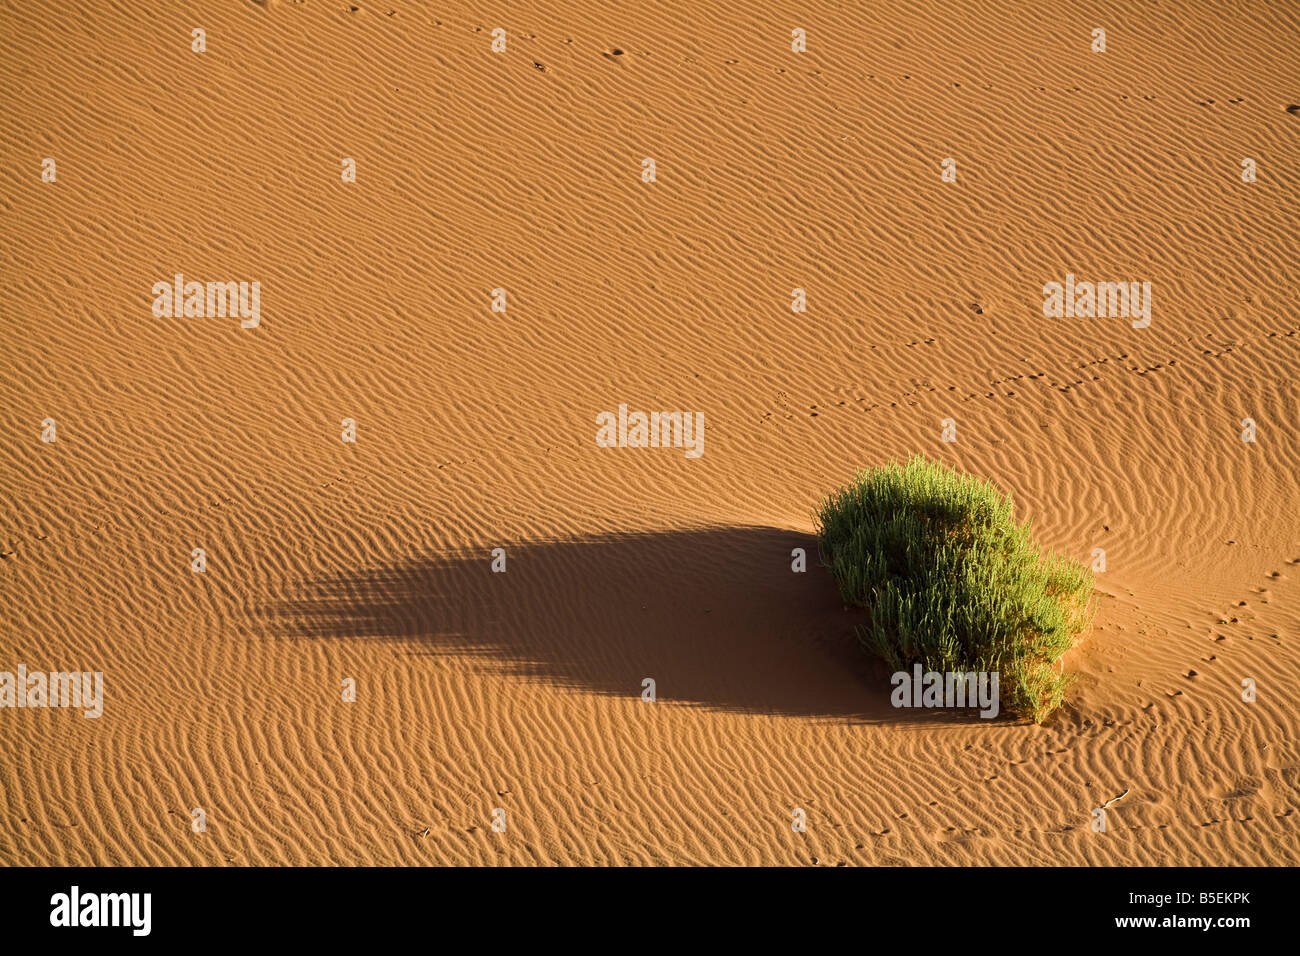 Africa, Namibia, Namib Desert, Nara shrub in the desert (Acanthosicyos horridus), elevated view Stock Photo